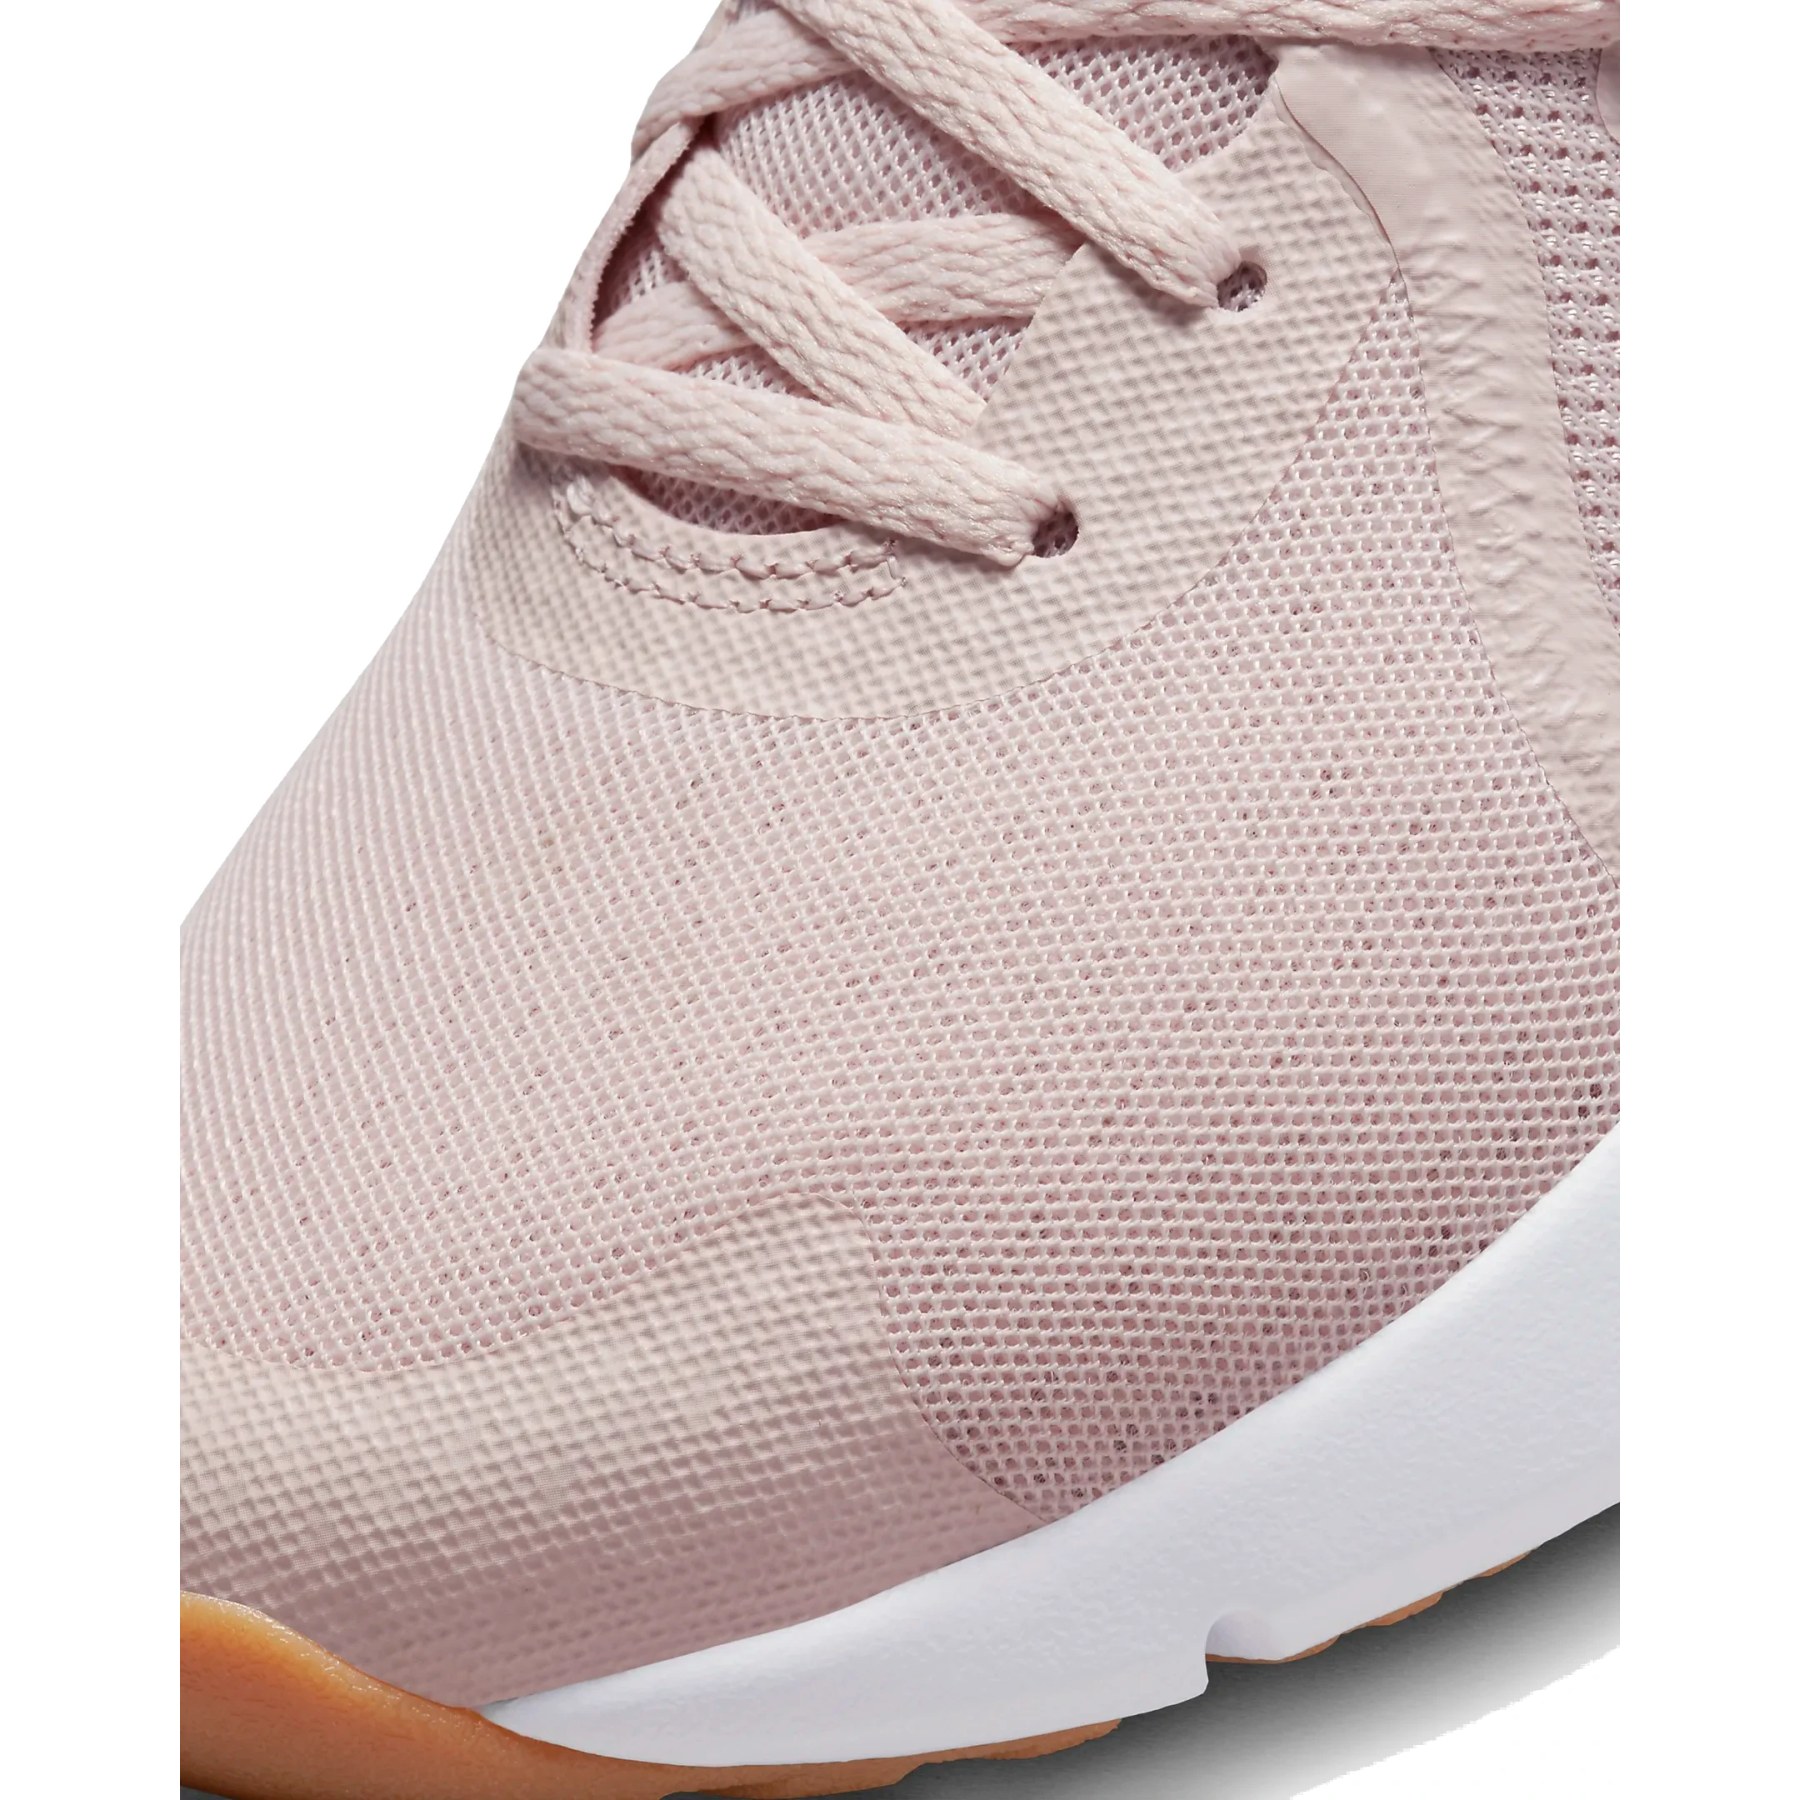 Uhrengeschäft Nike In-Season TR 13 Trainingsschuhe barely DV3975-600 - rose/white-pink Damen oxford